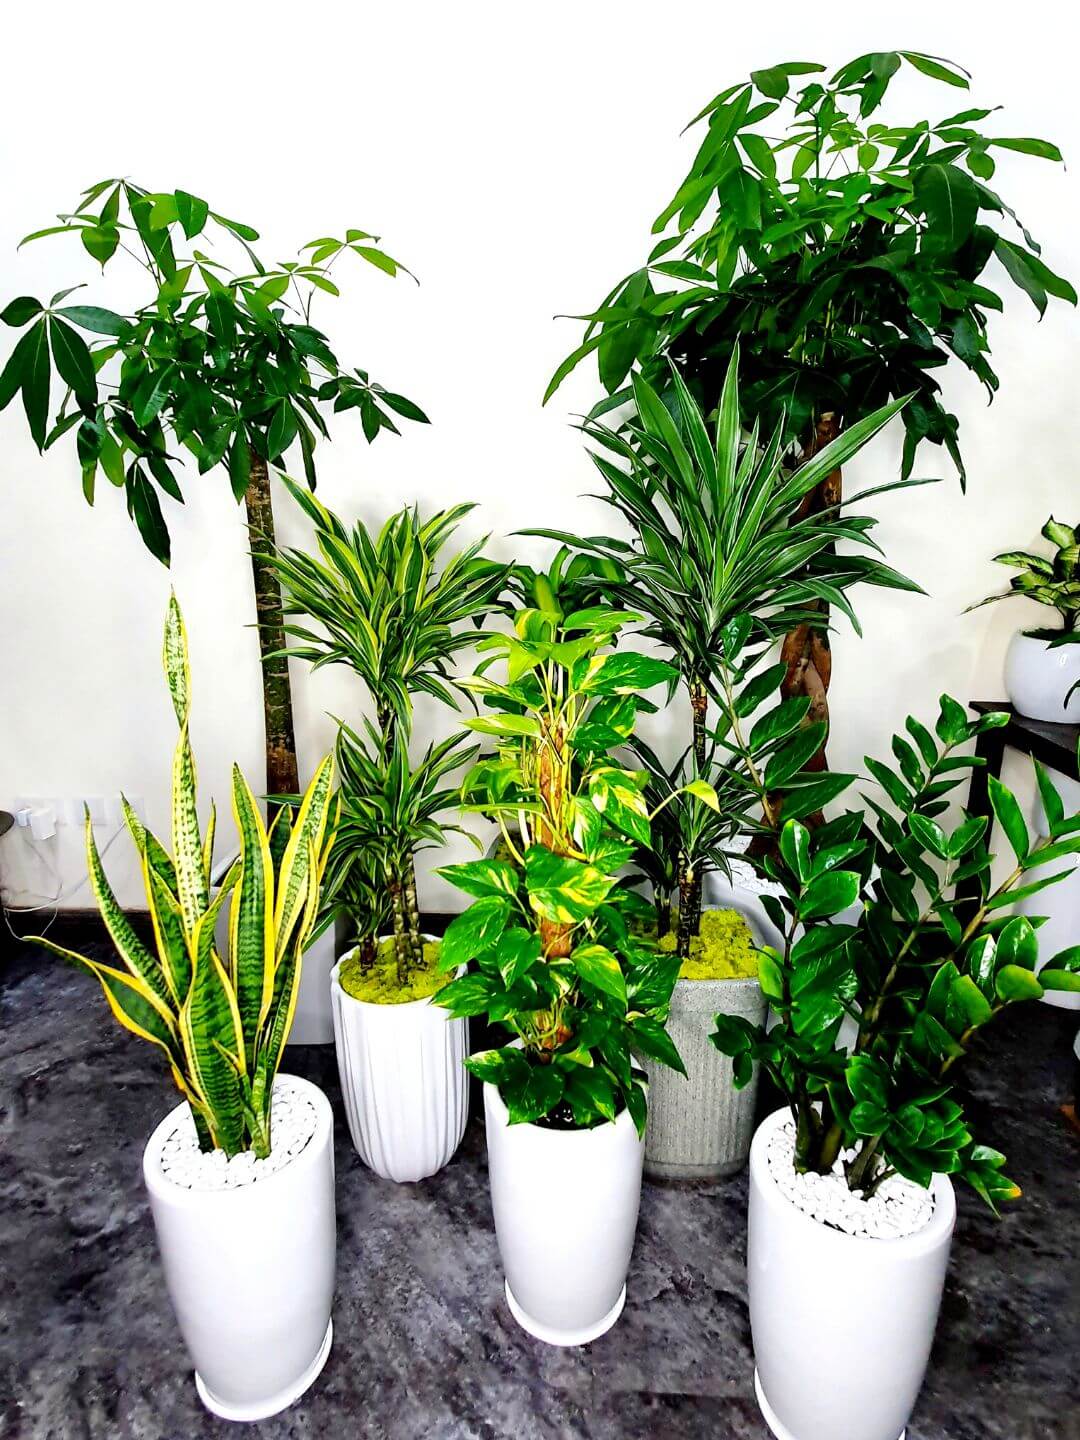 Corporate Office Bundle 8 Premium Plants | Low Light Planted in White Ceramic Pot